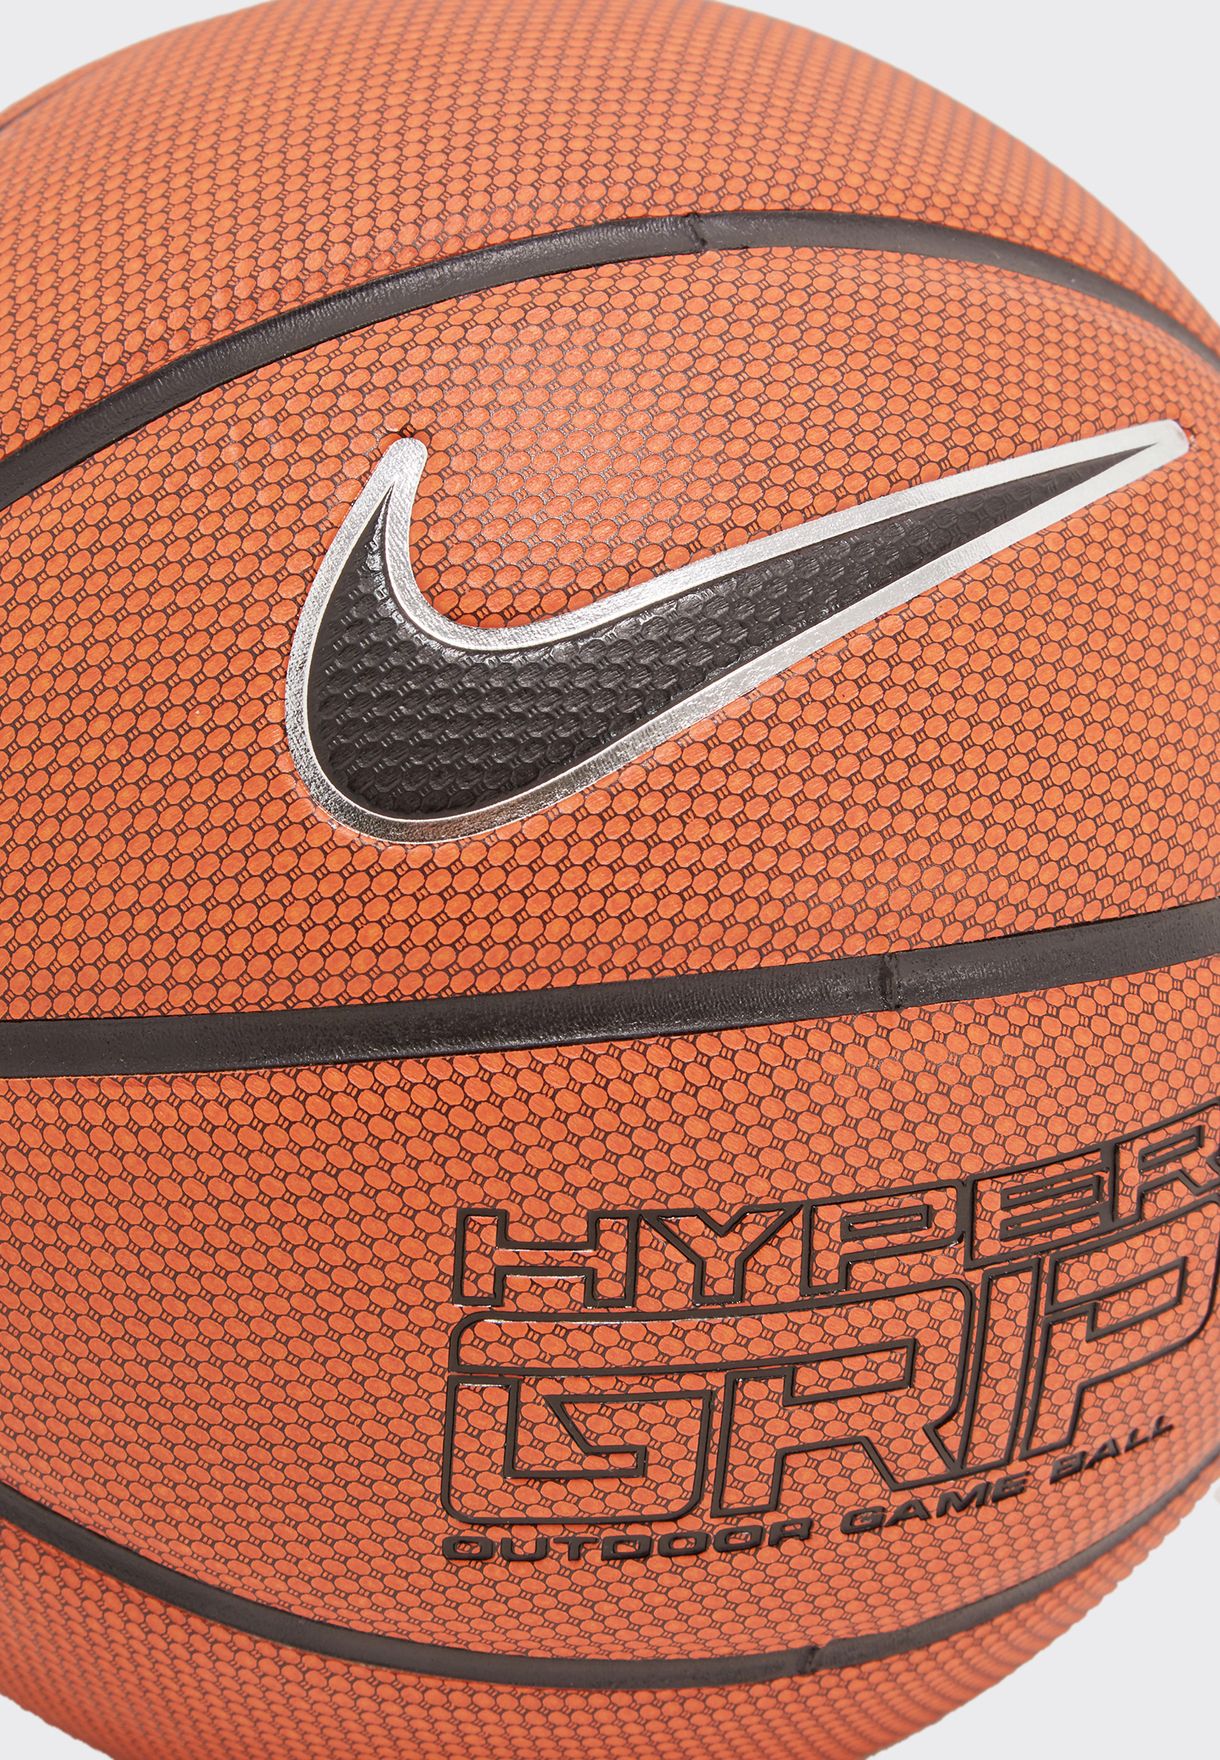 hypergrip basketball